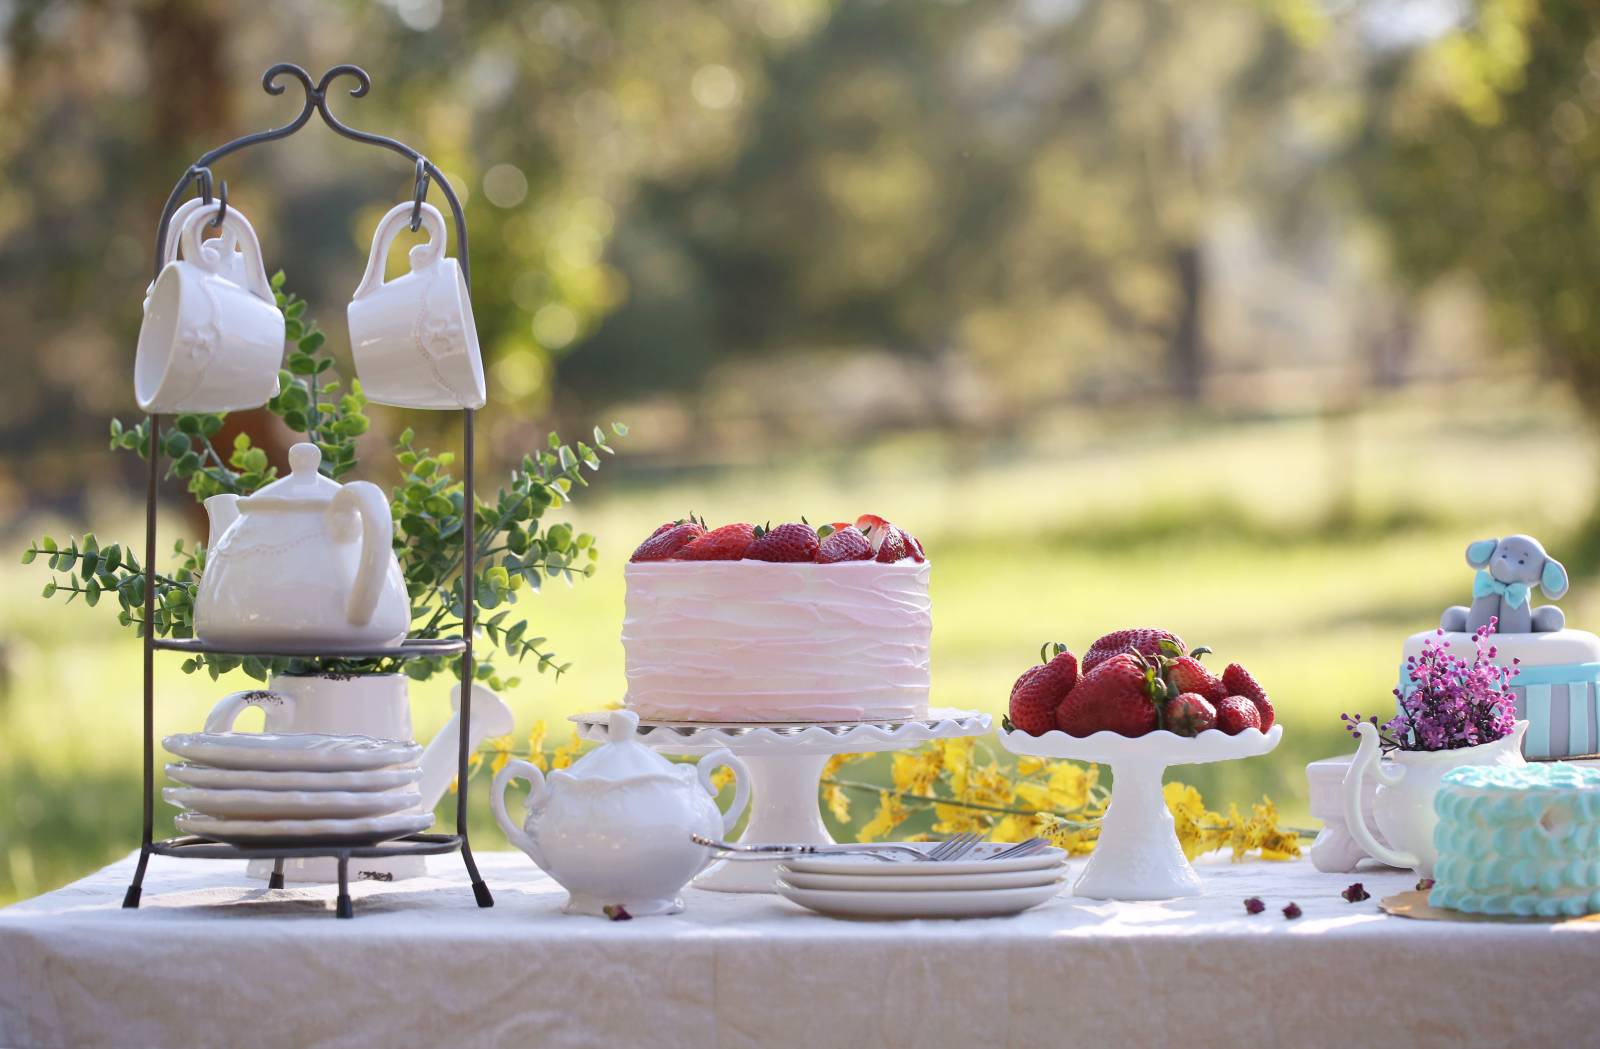 Wedding cake, tea and strawberries.